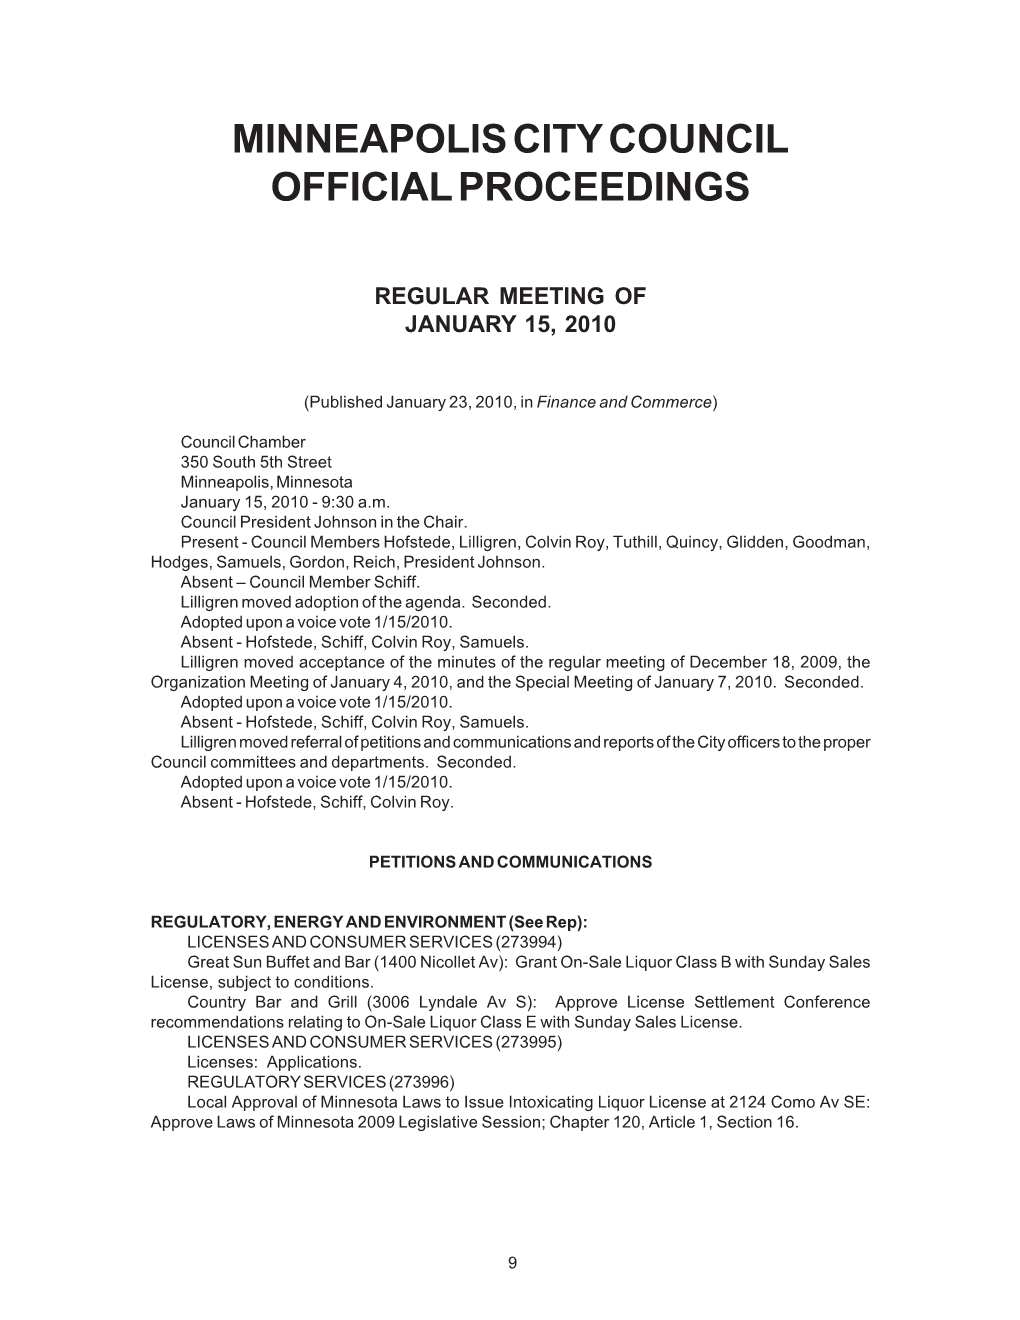 2010 Council Proceedings, January 15, 2010